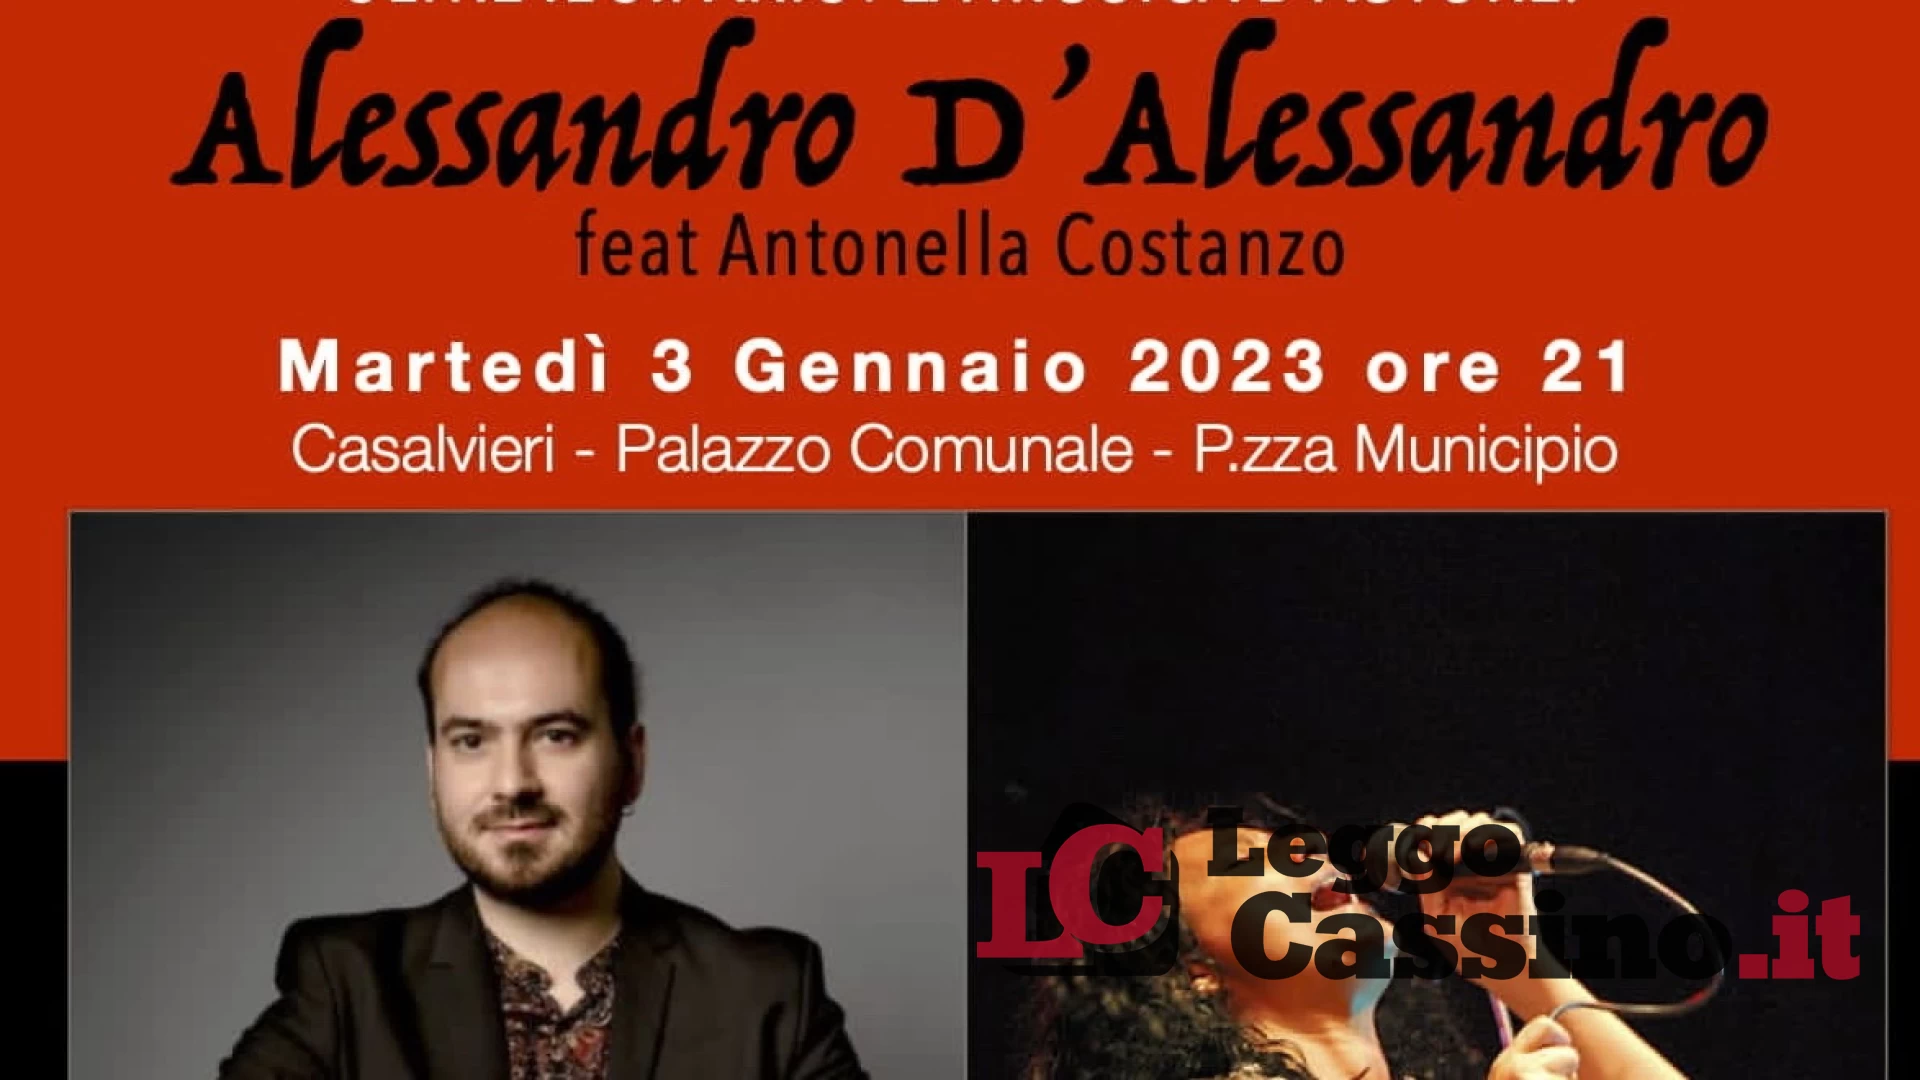 Alessandro D'Alessandro in concerto questa sera a Casalvieri